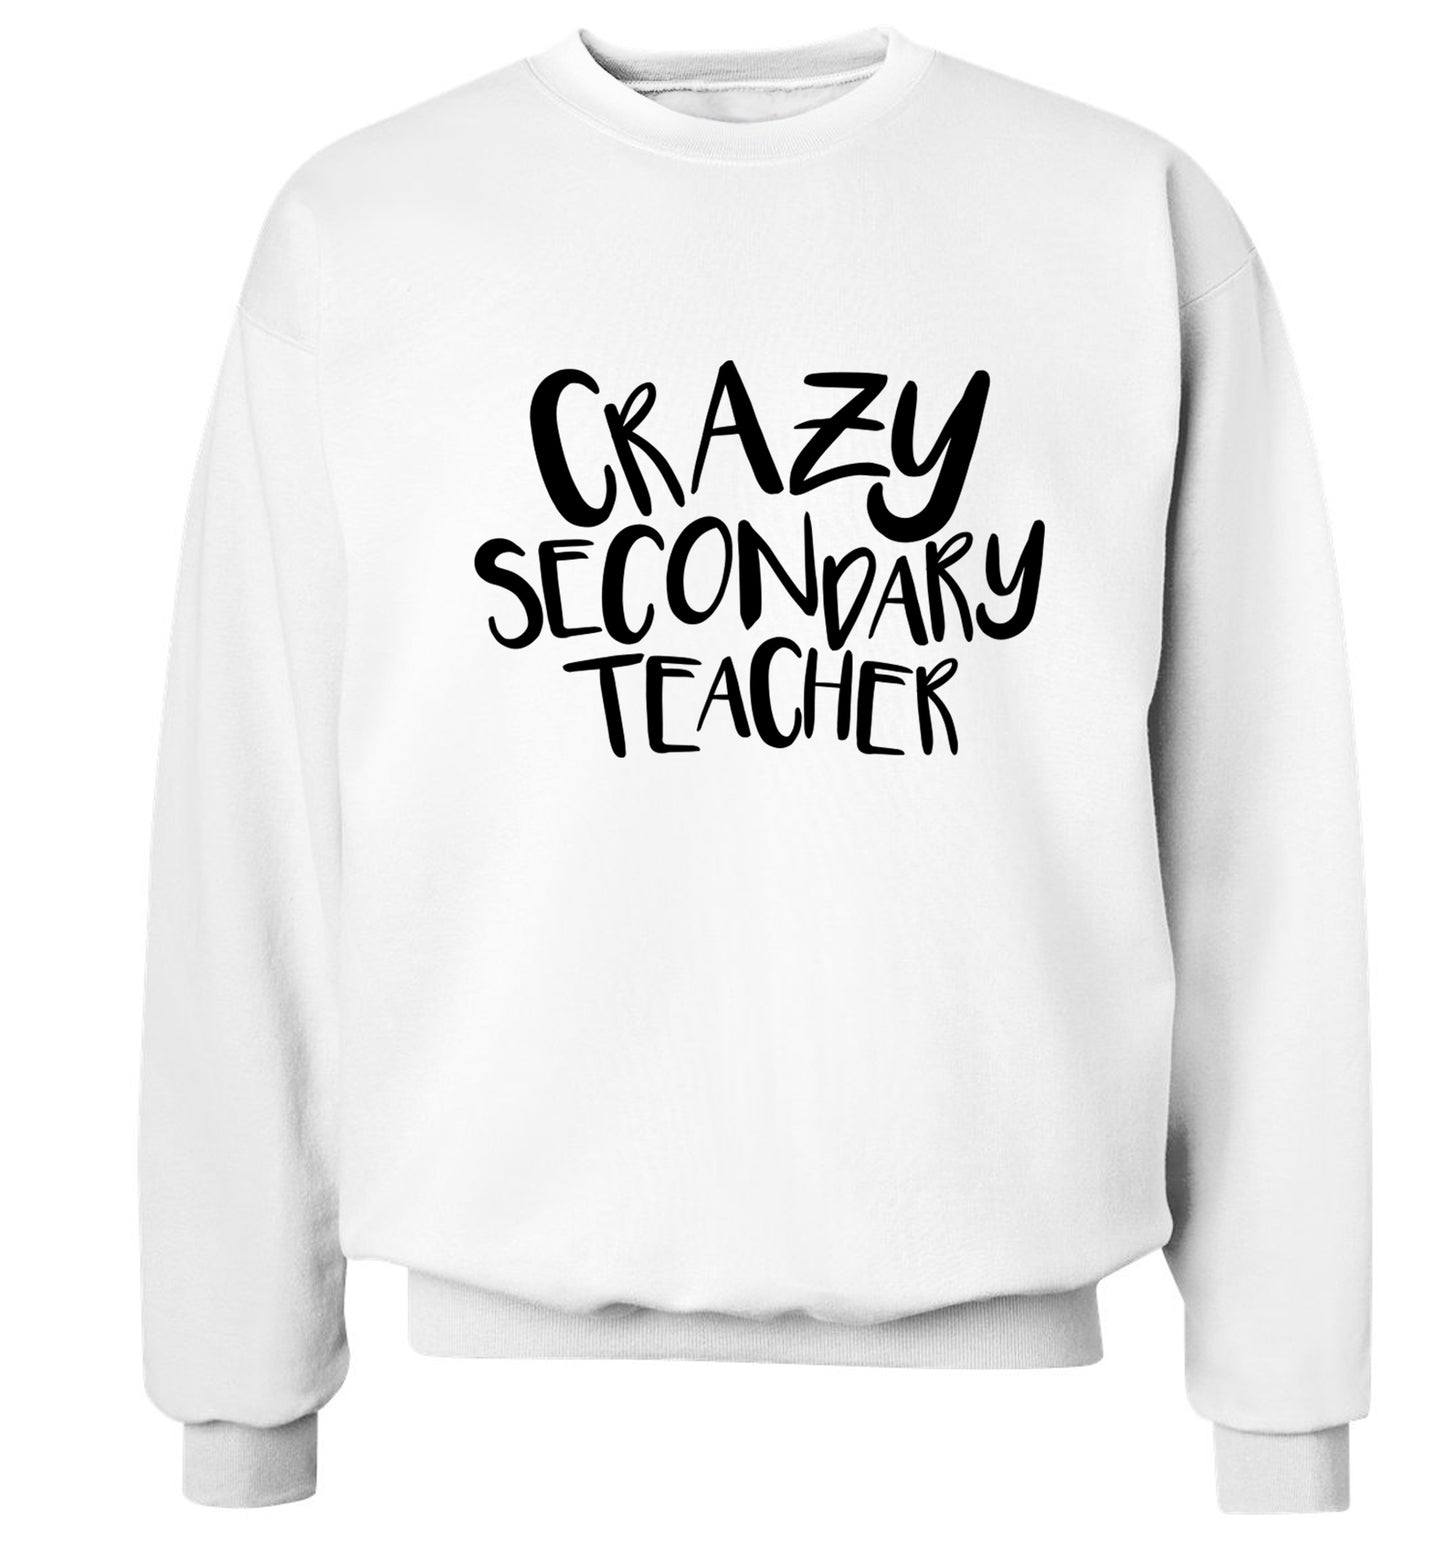 Crazy secondary teacher Adult's unisex white Sweater 2XL